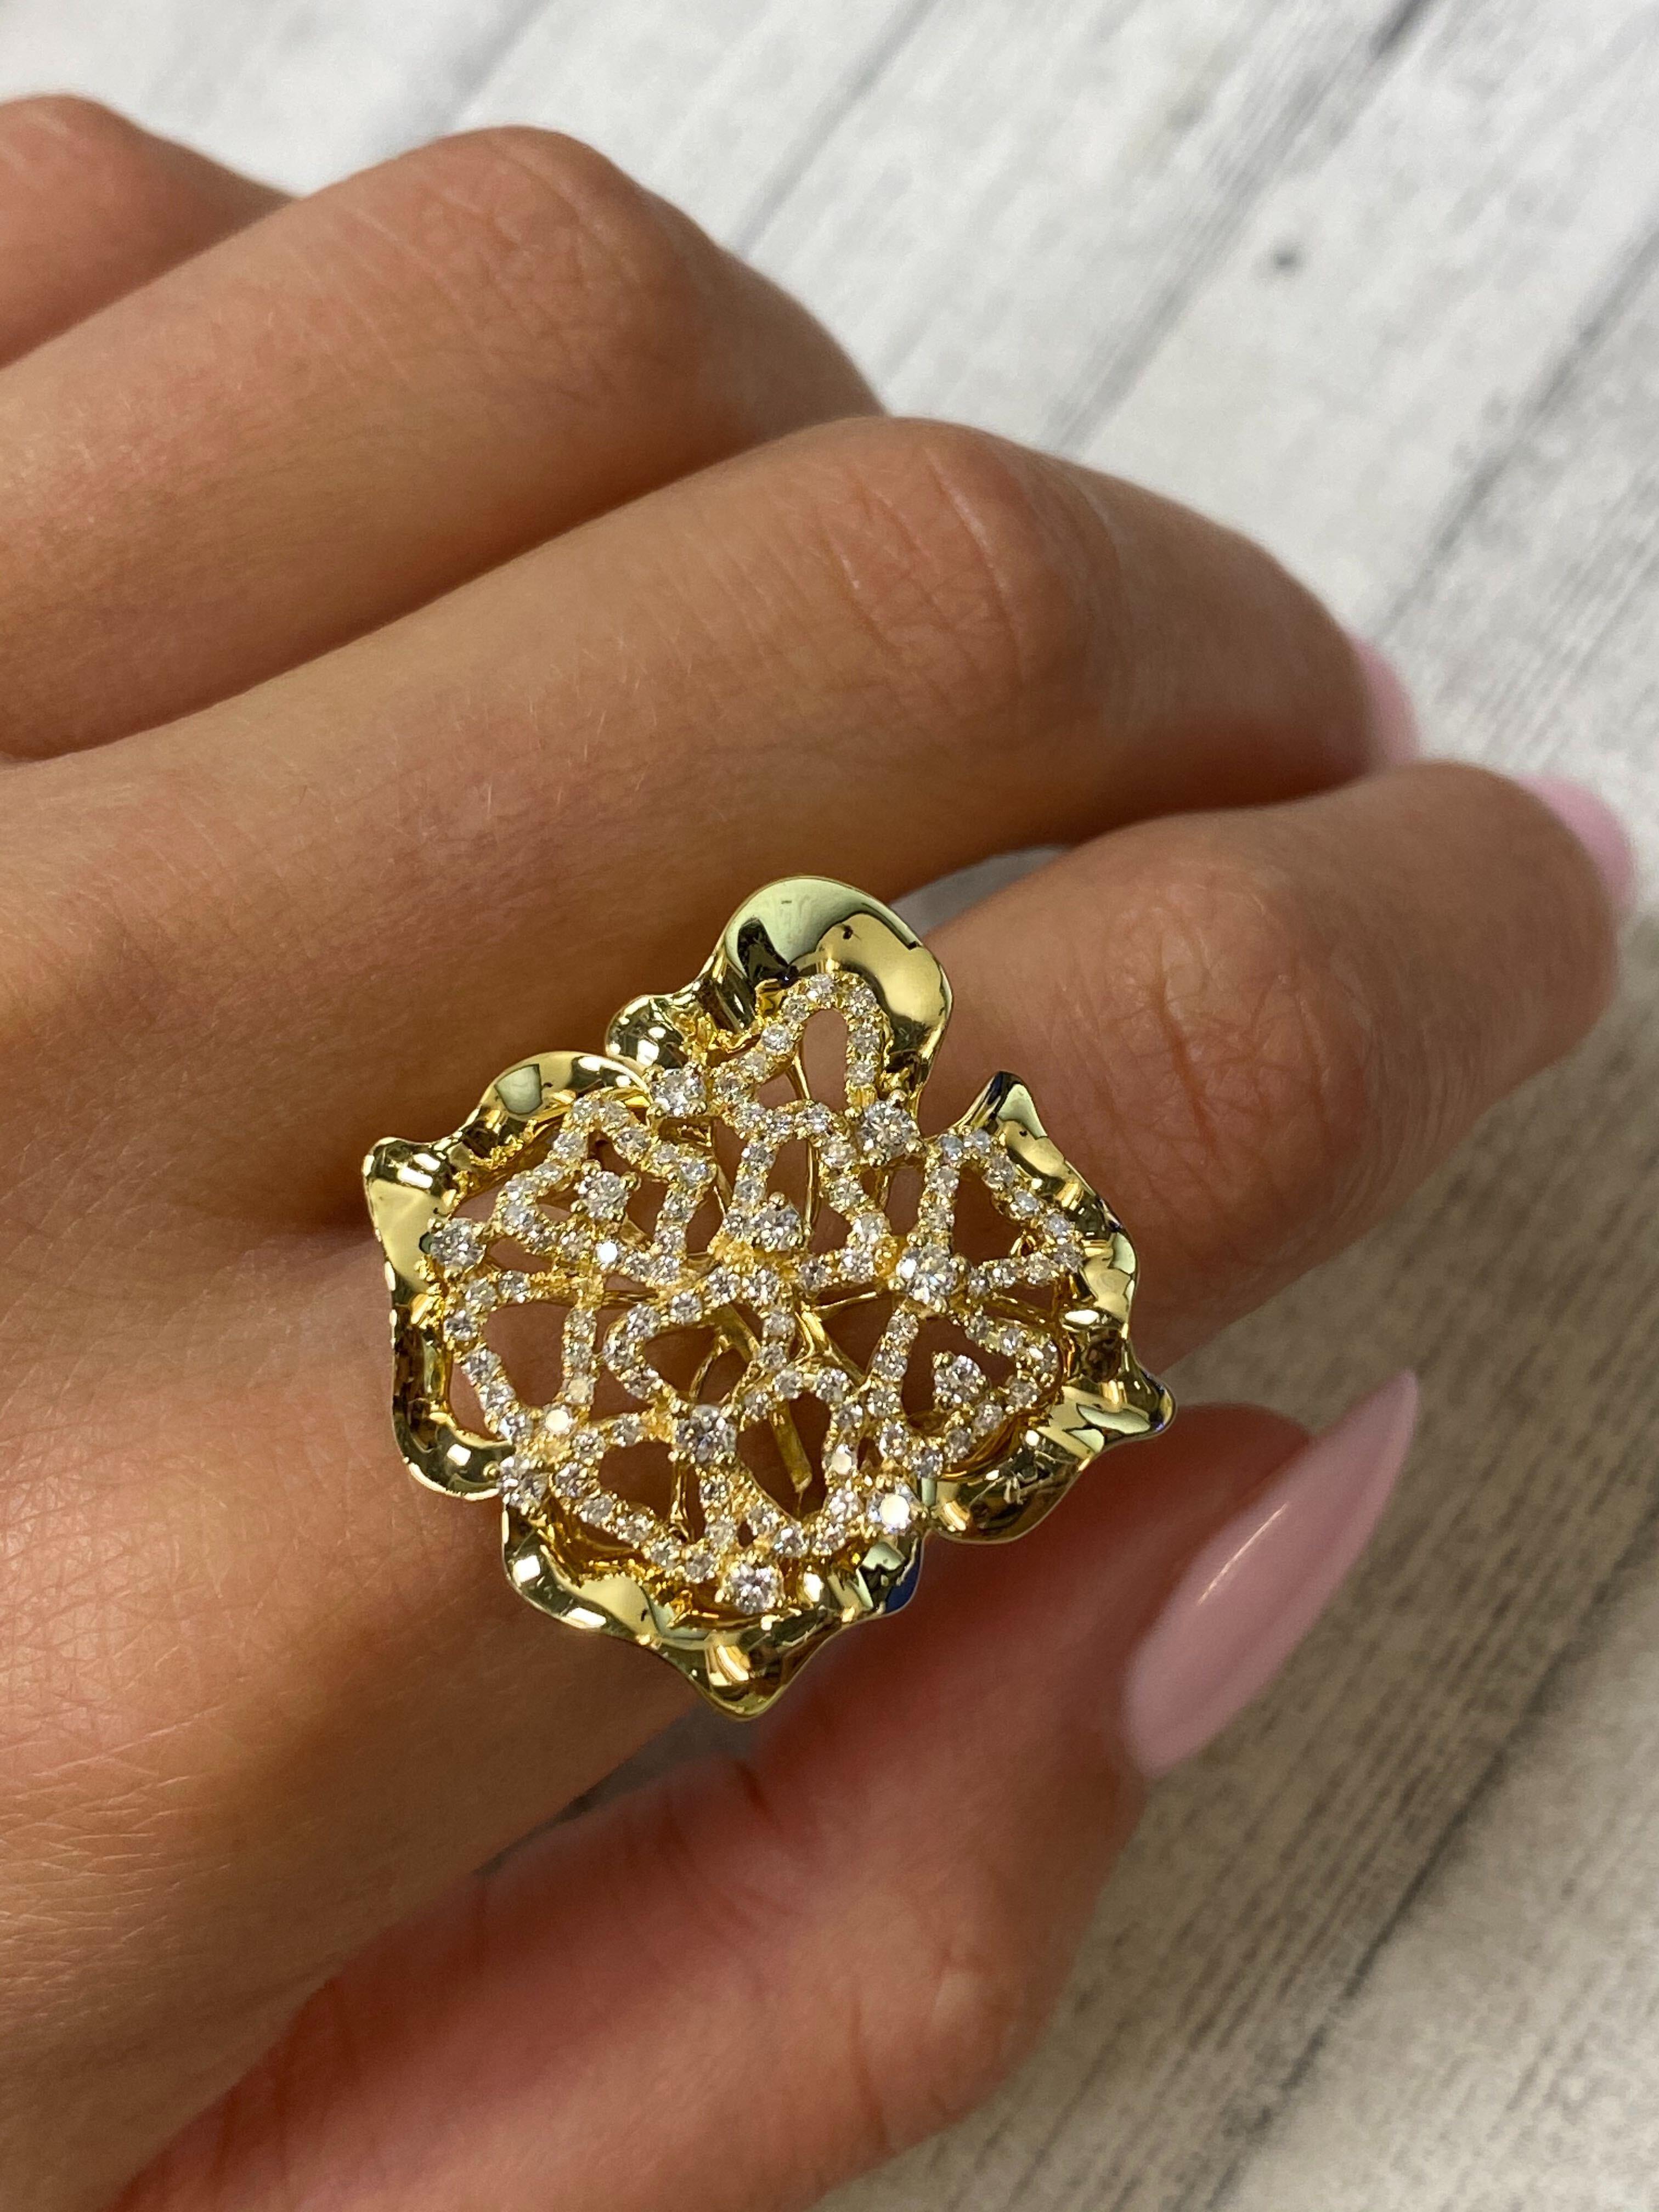 Rachel Koen Large Floral Diamond Cocktail Ring 18K Yellow Gold 0.75cttw For Sale 1